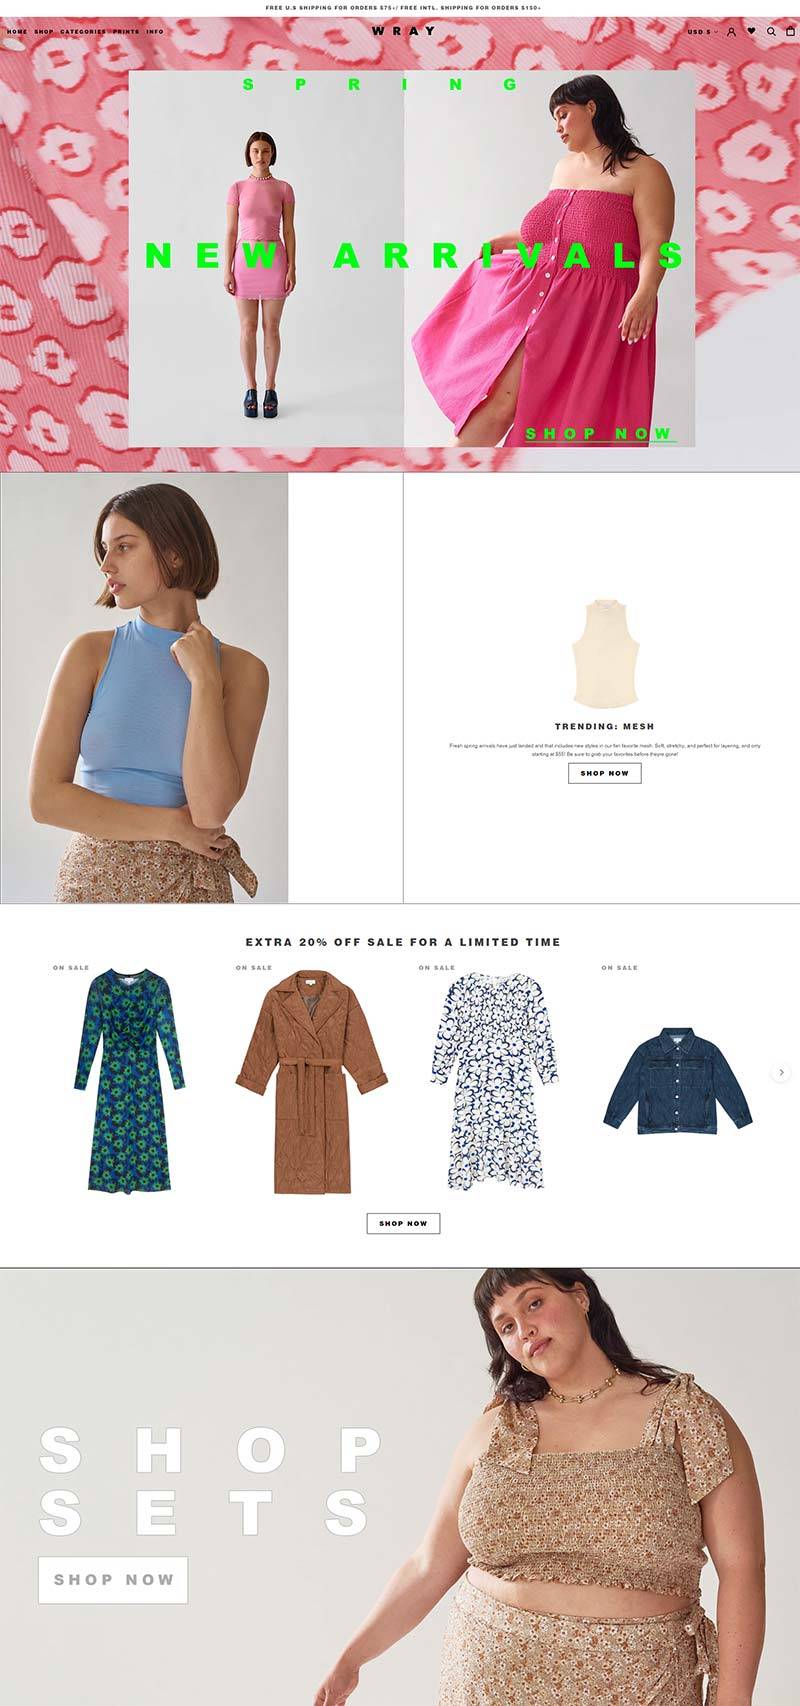 WRAY 美国创意时尚女装品牌购物网站